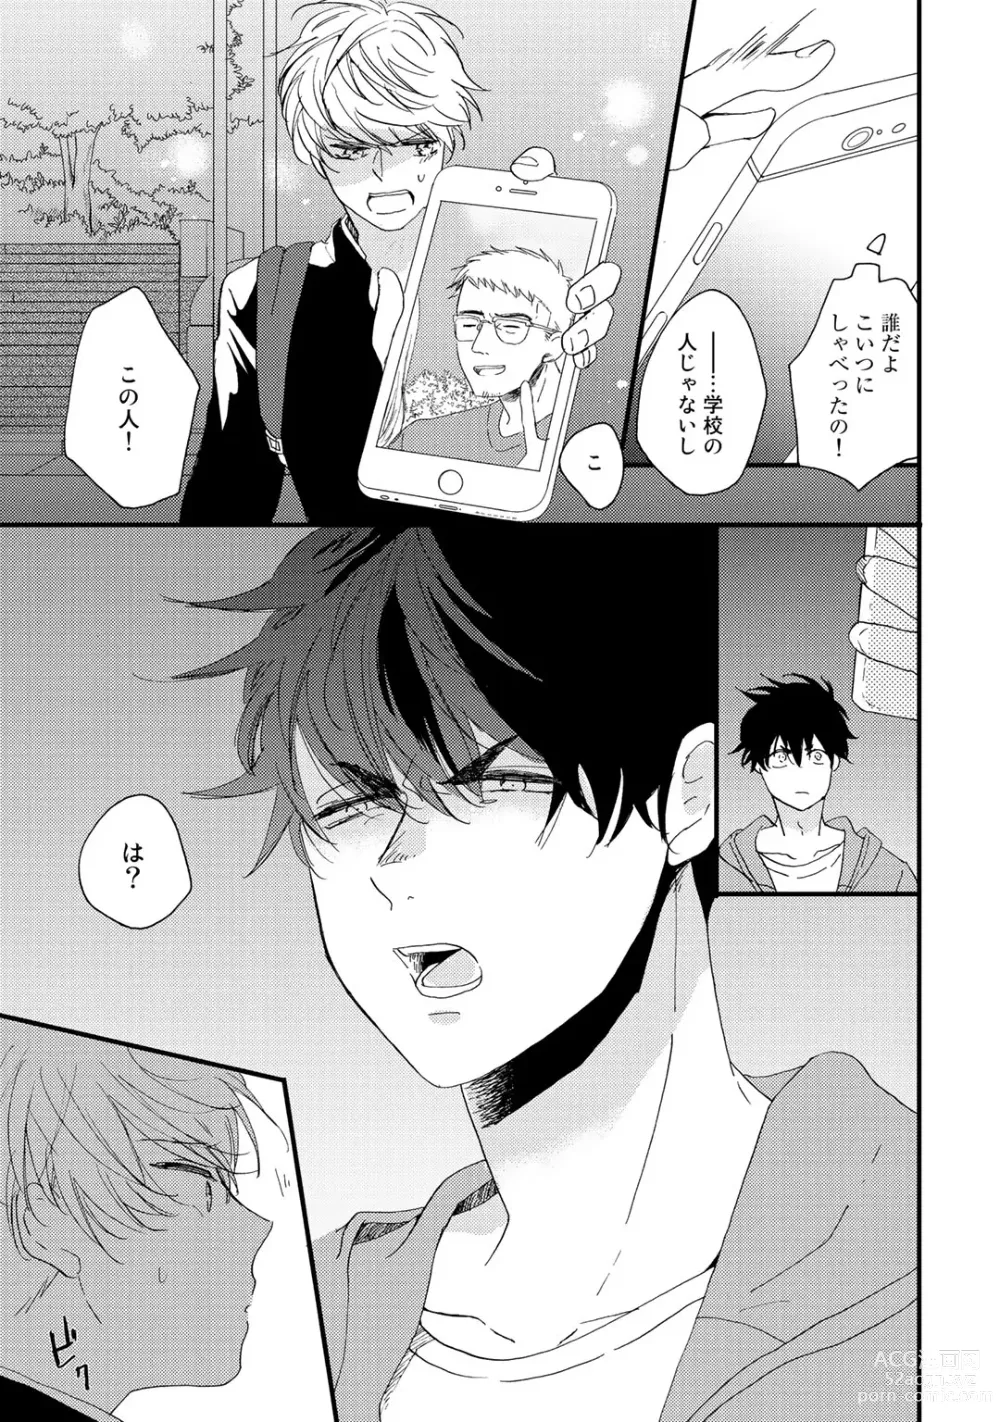 Page 27 of manga Hatsukoi Escape